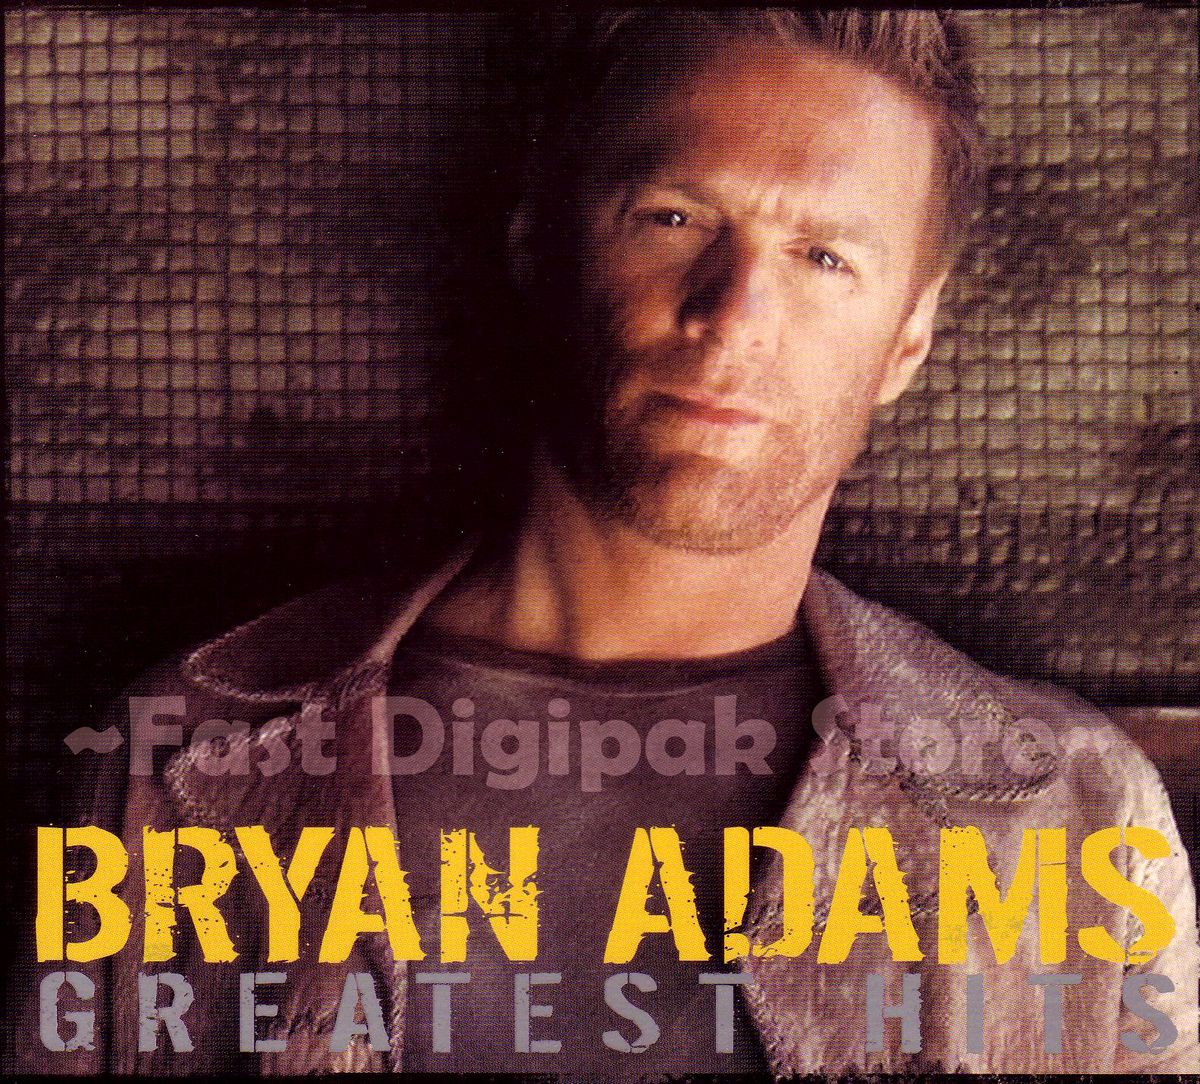 BRYAN ADAMS Greatest Hits 2008 2CD Digipak edition Same day shipping 